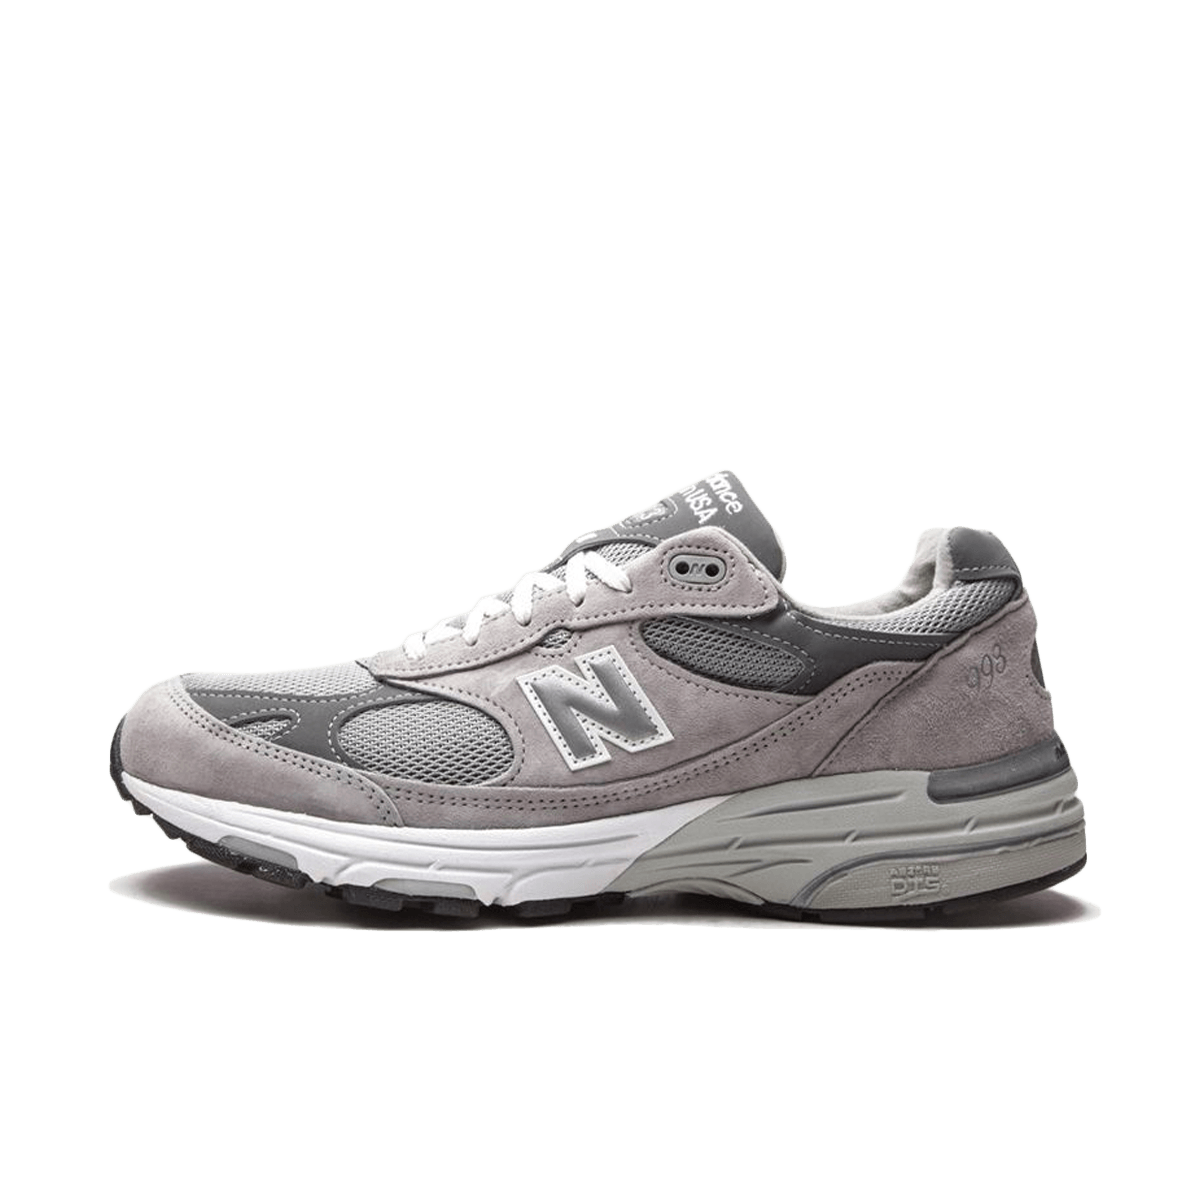 New Balance 993 "Grey' MR993GL